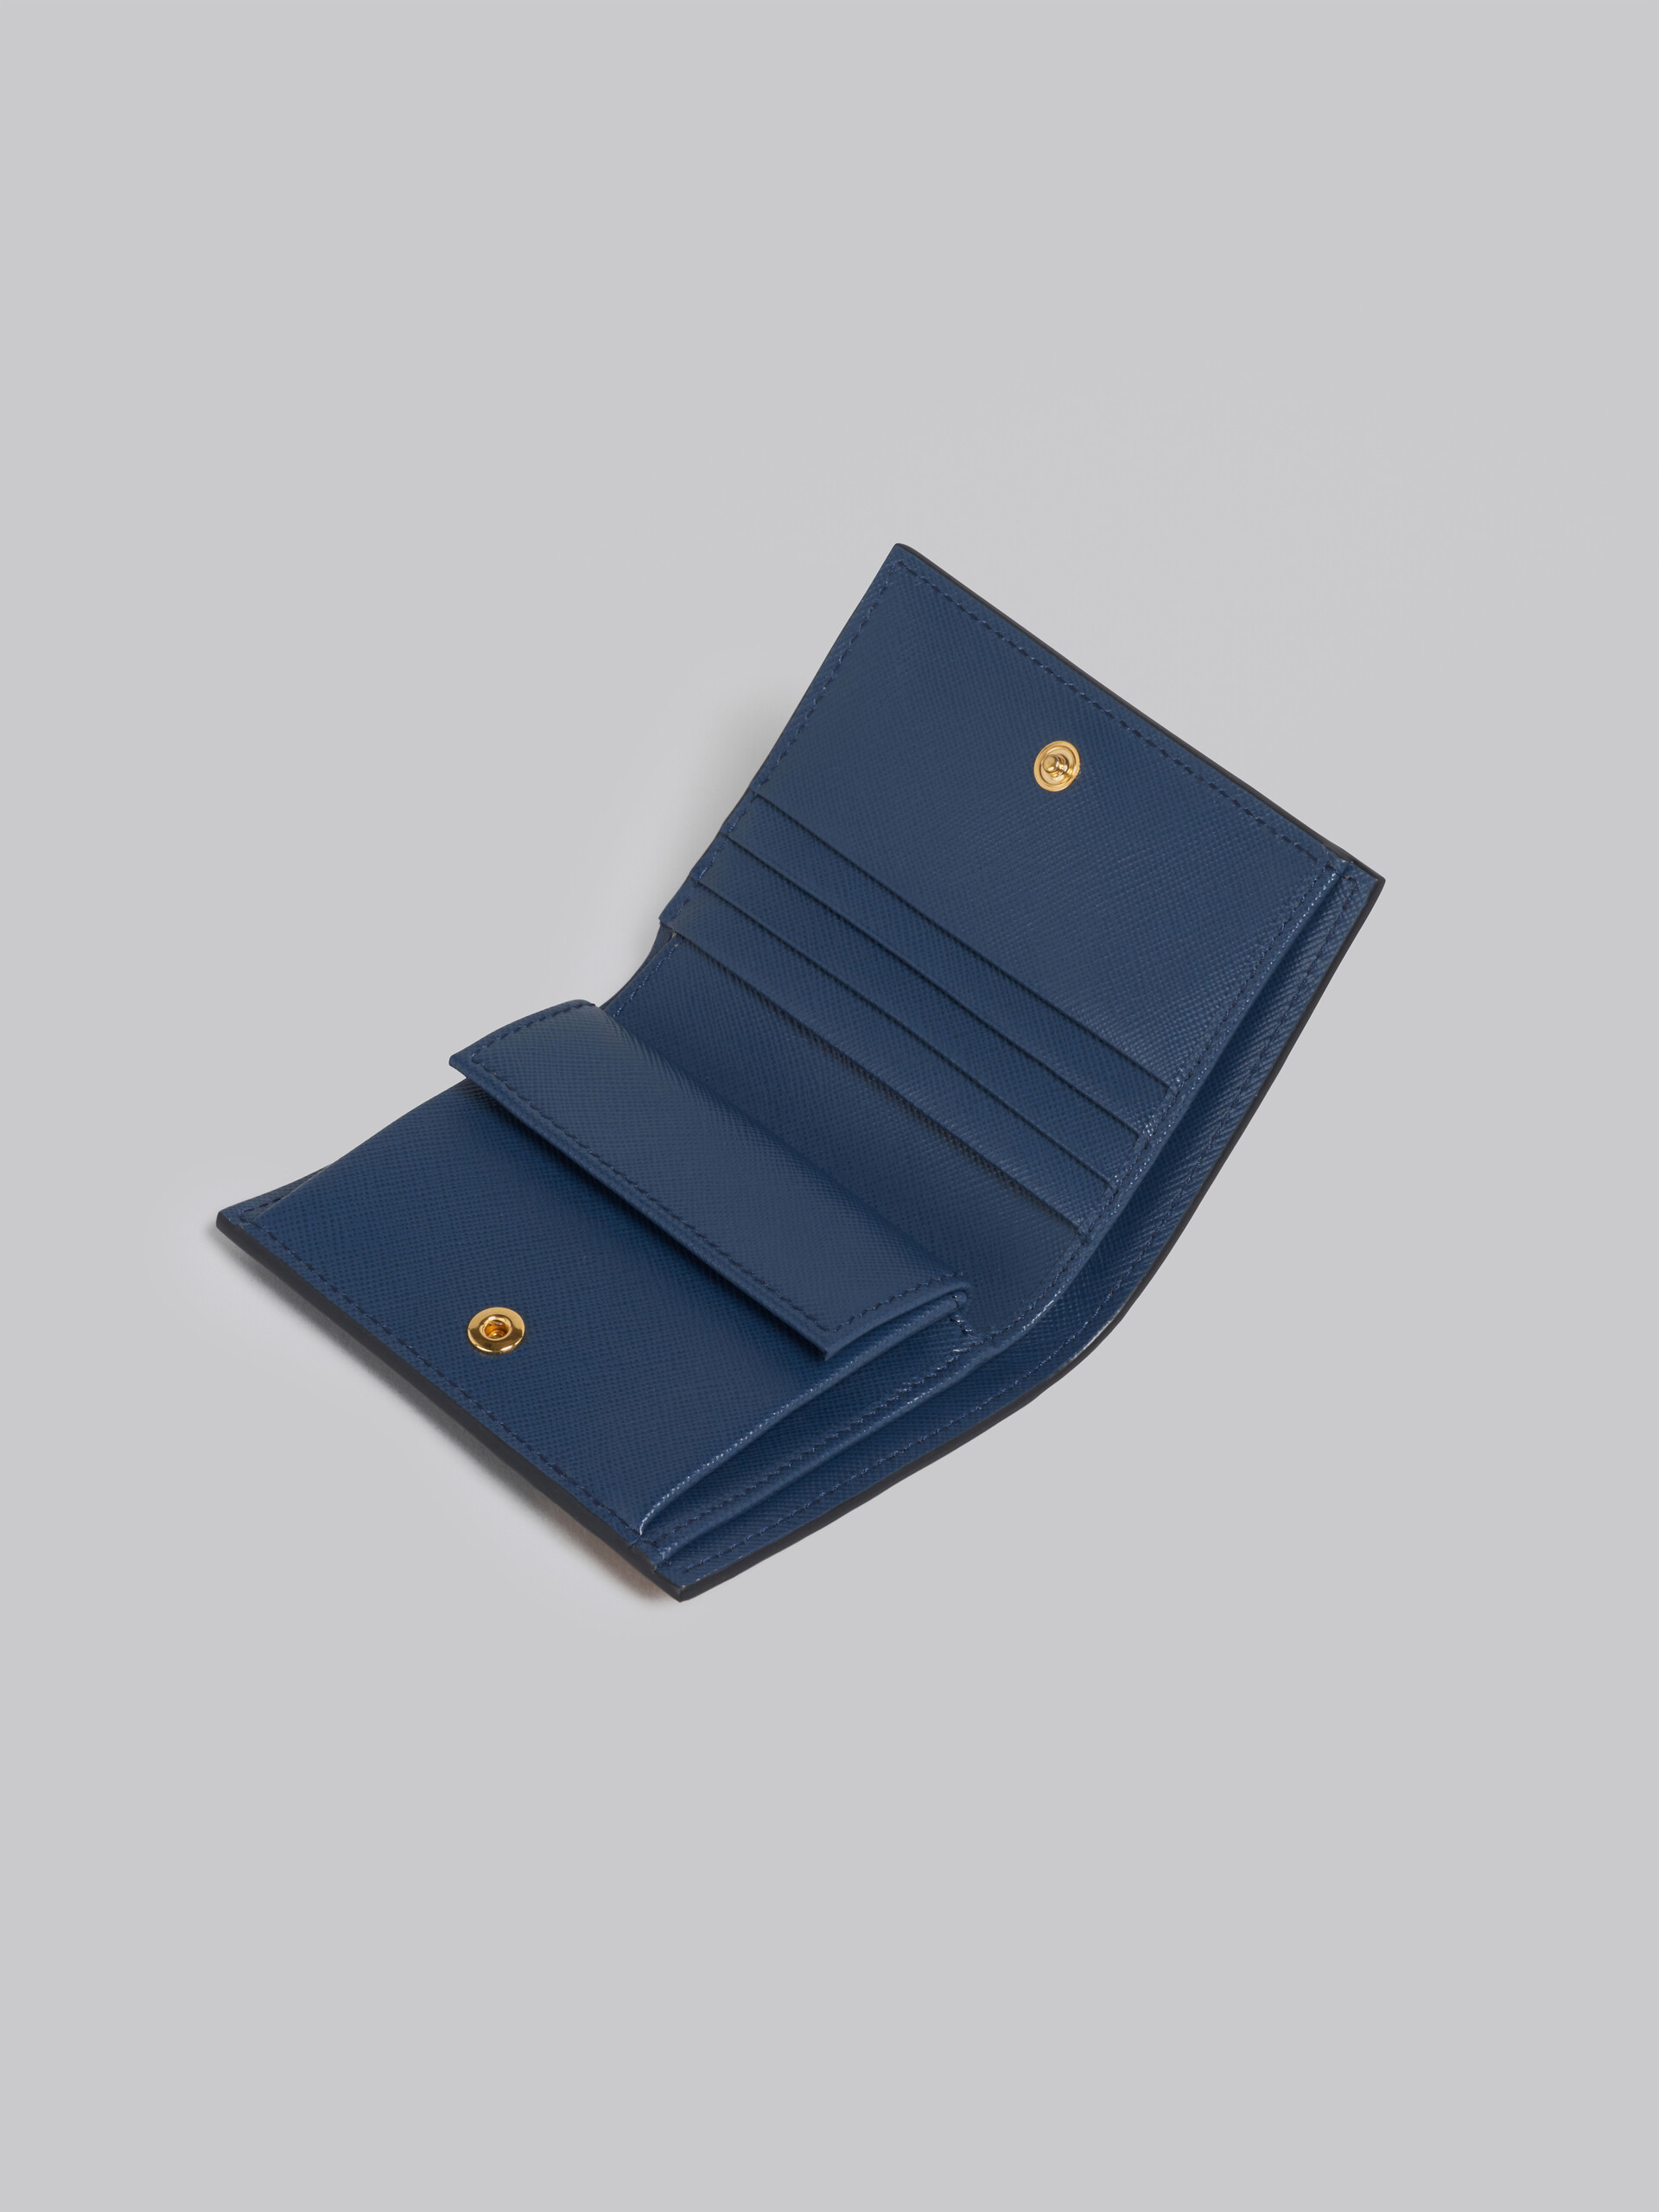 Orange pink and blue saffiano leather bi-fold wallet - Wallets - Image 4